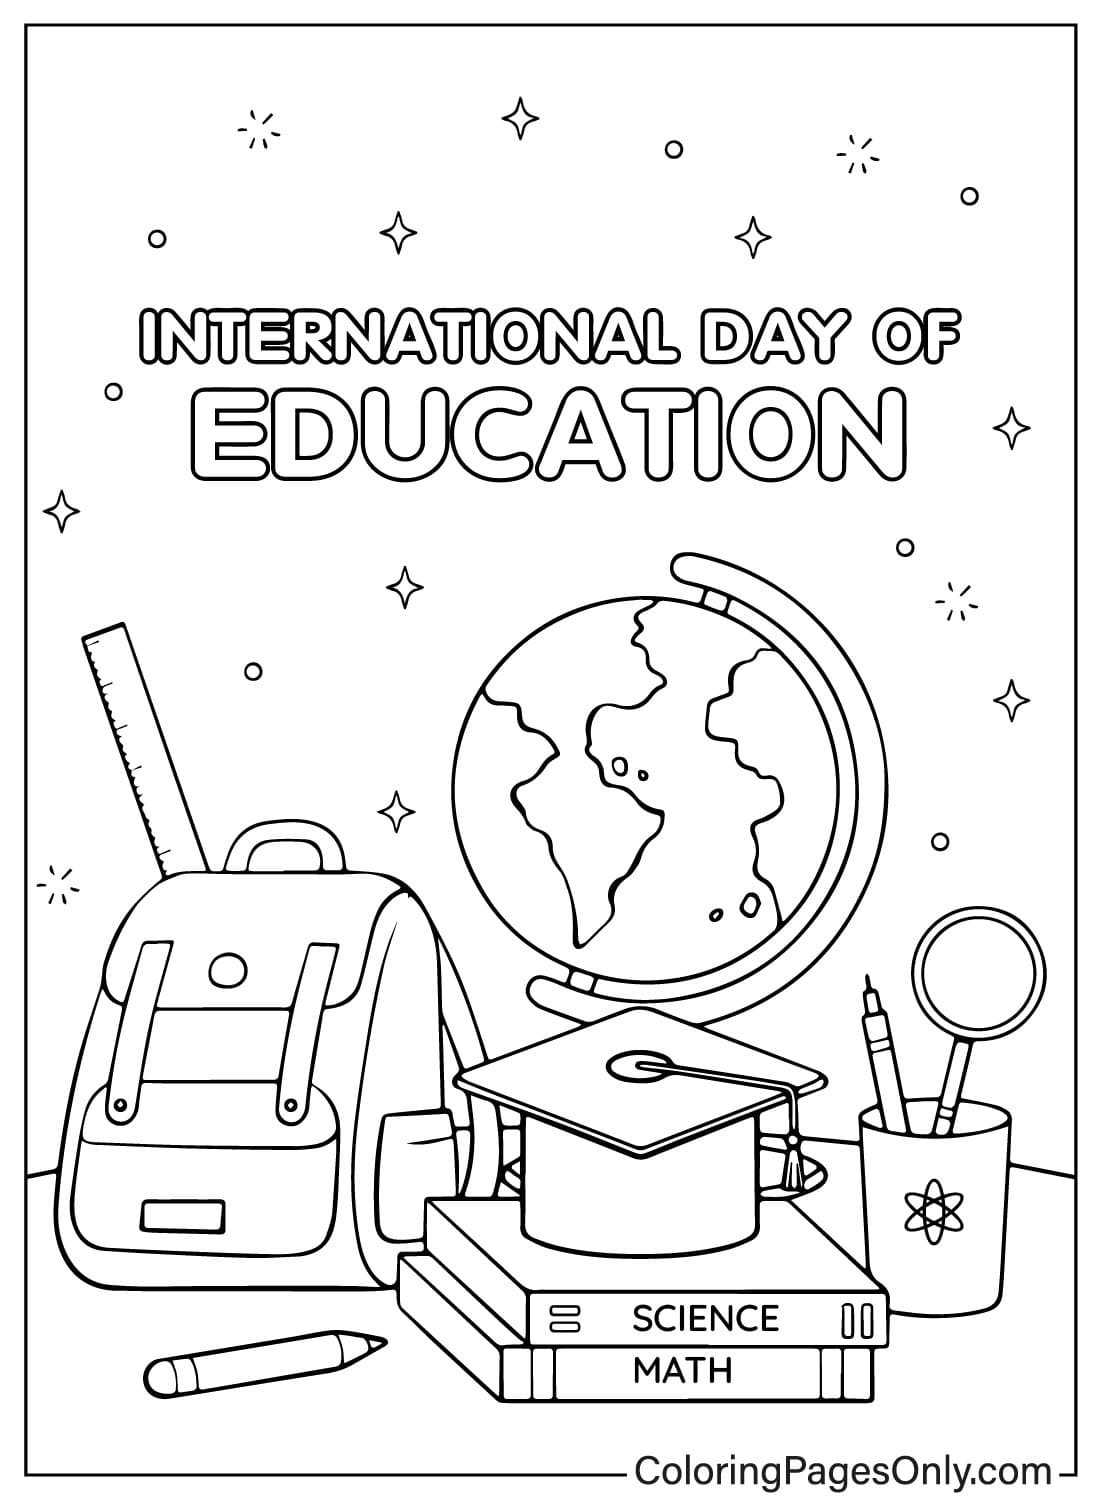 Free Printable International Day of Education Coloring Page from International Day of Education